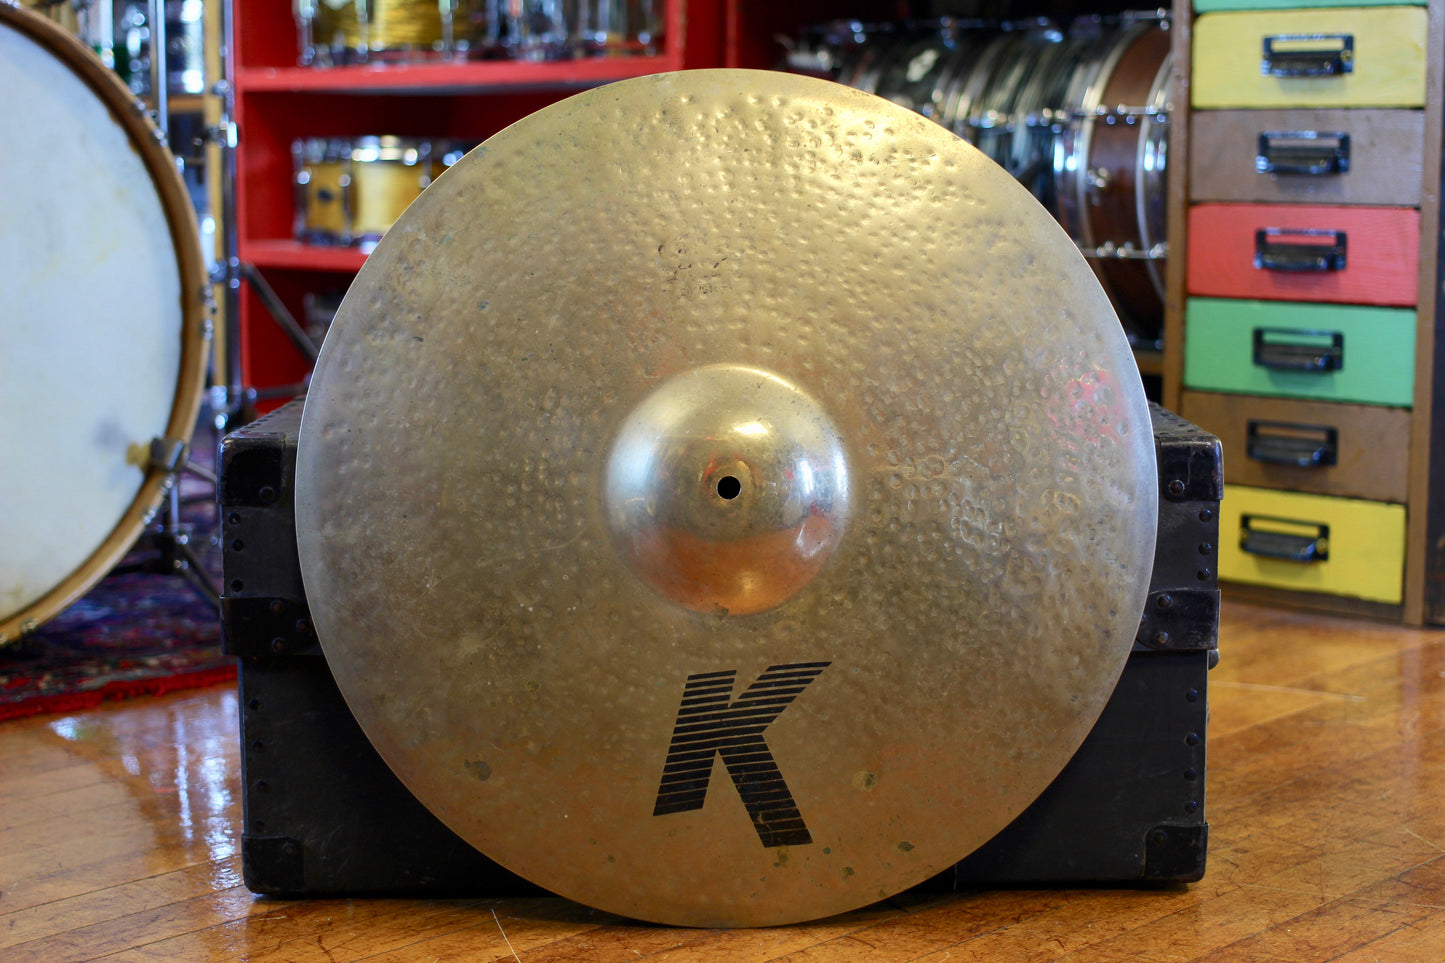 Zildjian K Custom 20" Ride Cymbal 2760g - USED